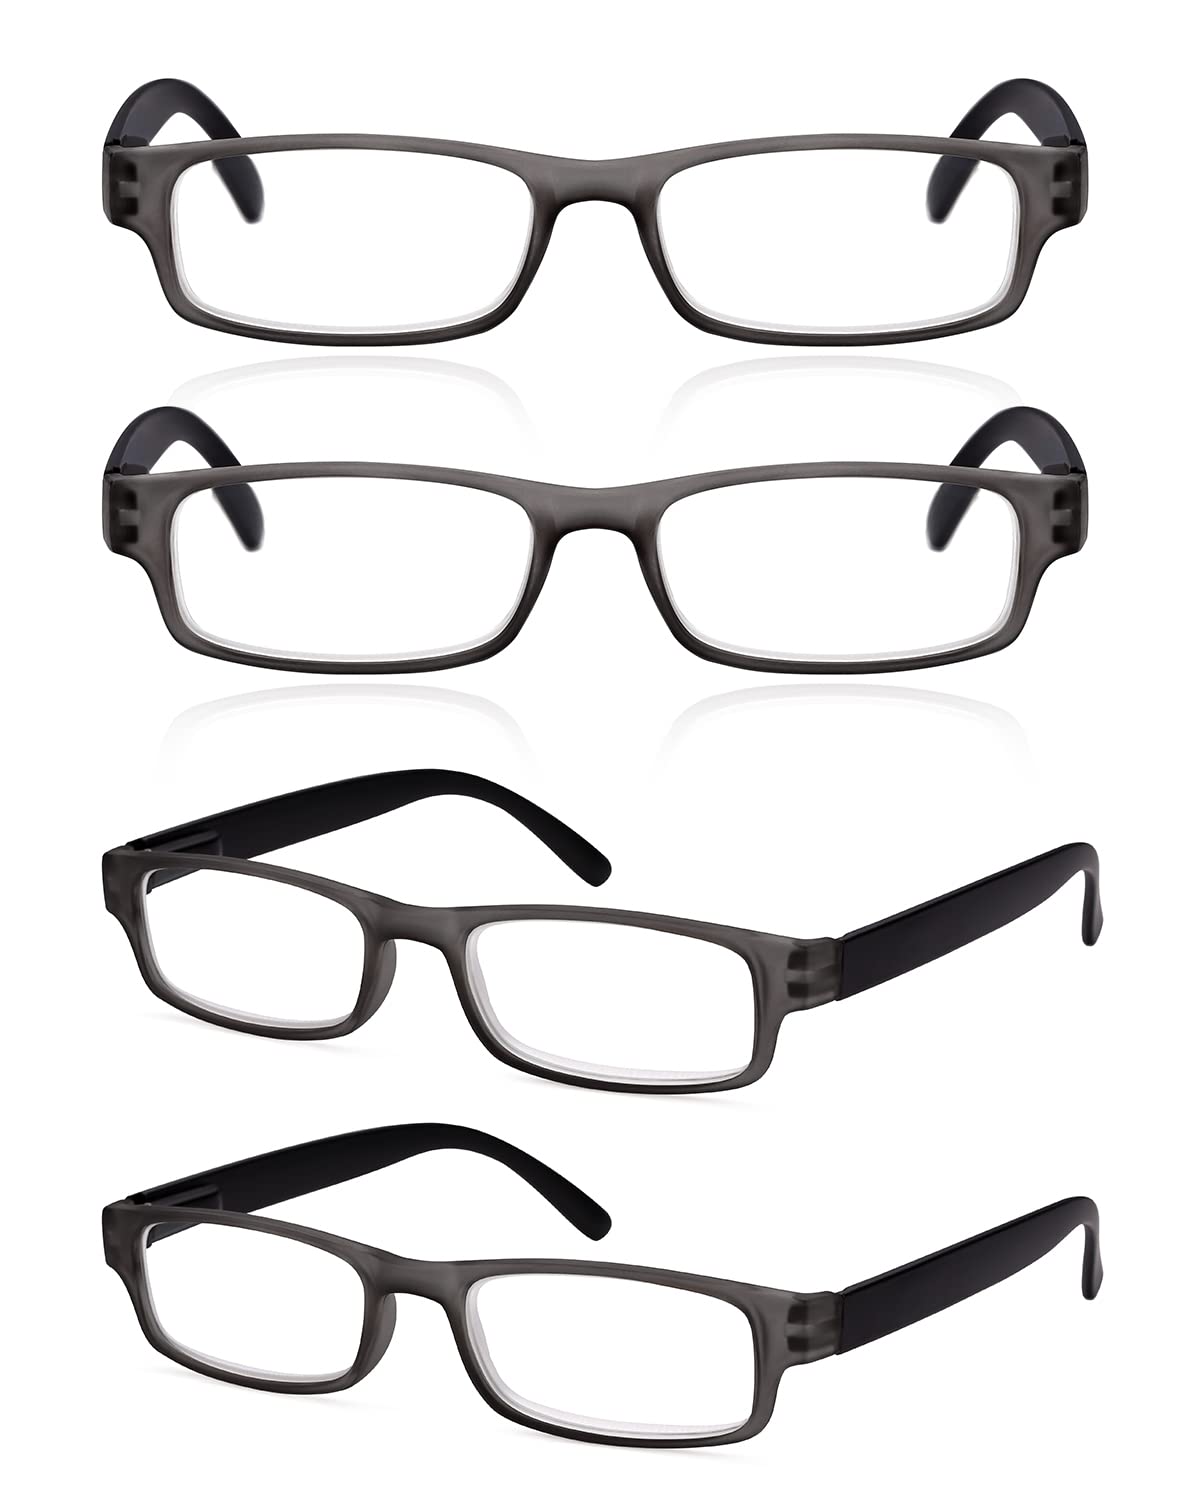 LUFF 4-Pack reading glasses for women men lightweight blue light blocking readers eyeglasses with spring hinge readers